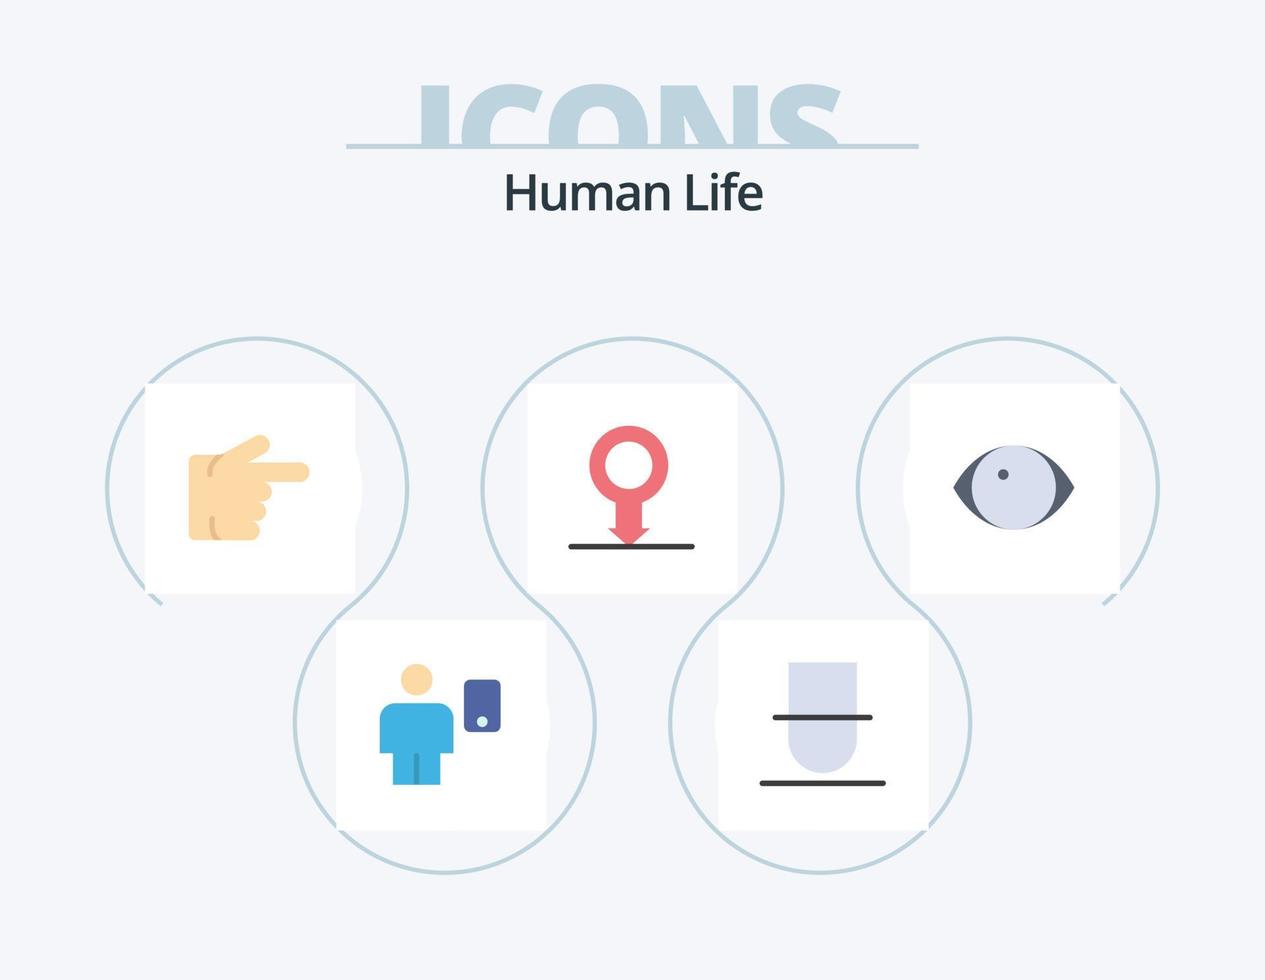 humano plano icono paquete 5 5 icono diseño. humano. ojo. usuario. sexo. humano vector